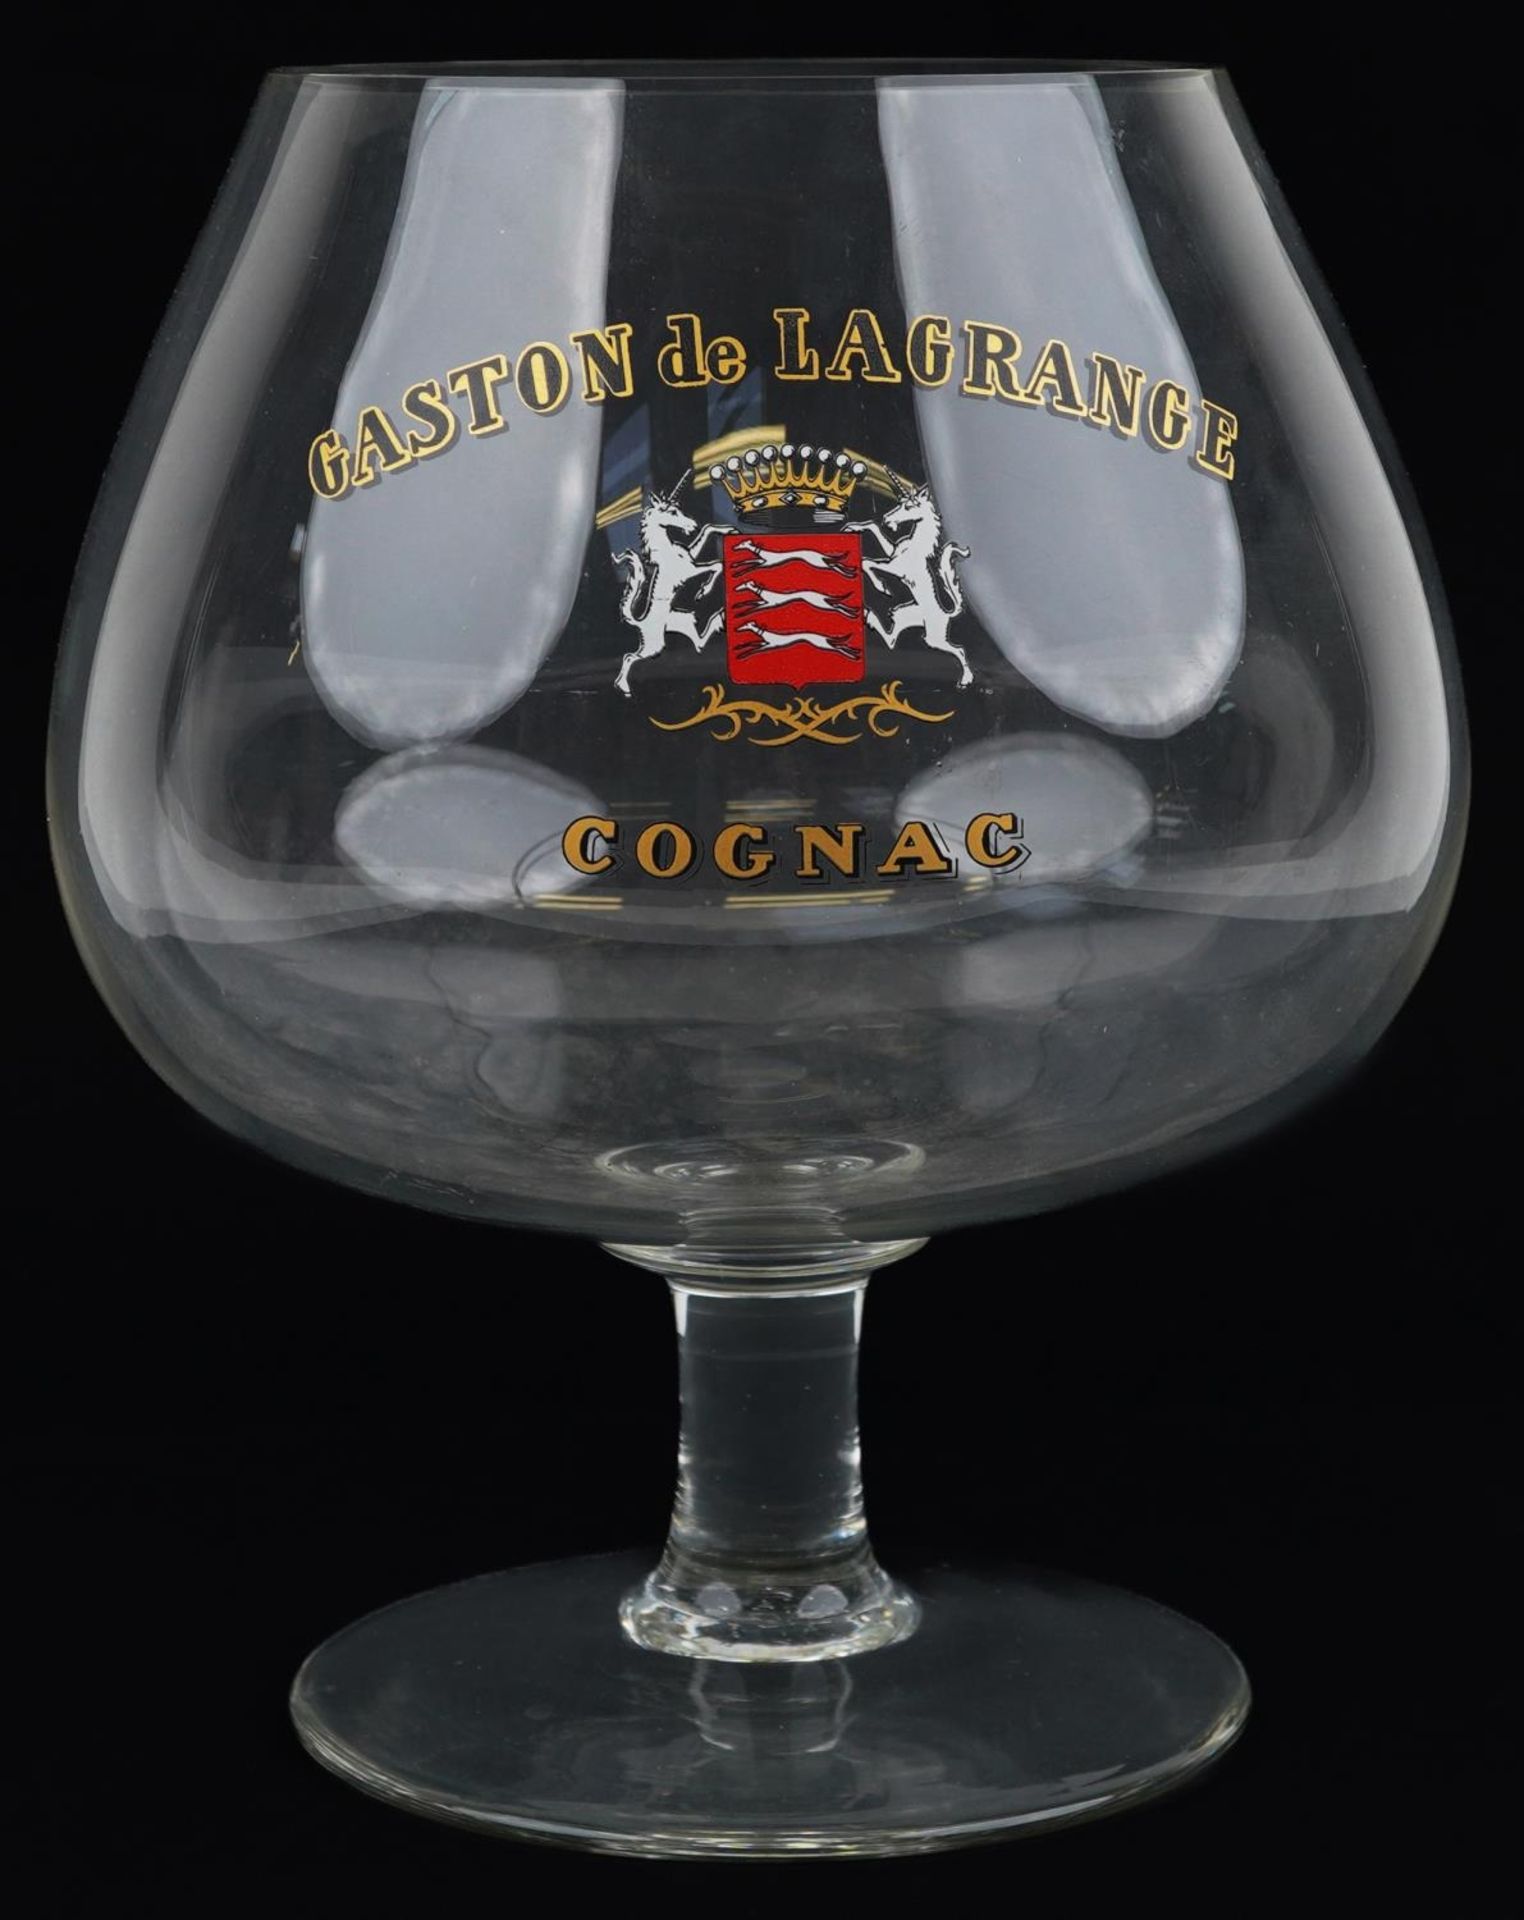 19th/early 20th century oversized cognac glass advertising Gaston de la Grange Cognac, 30cm high